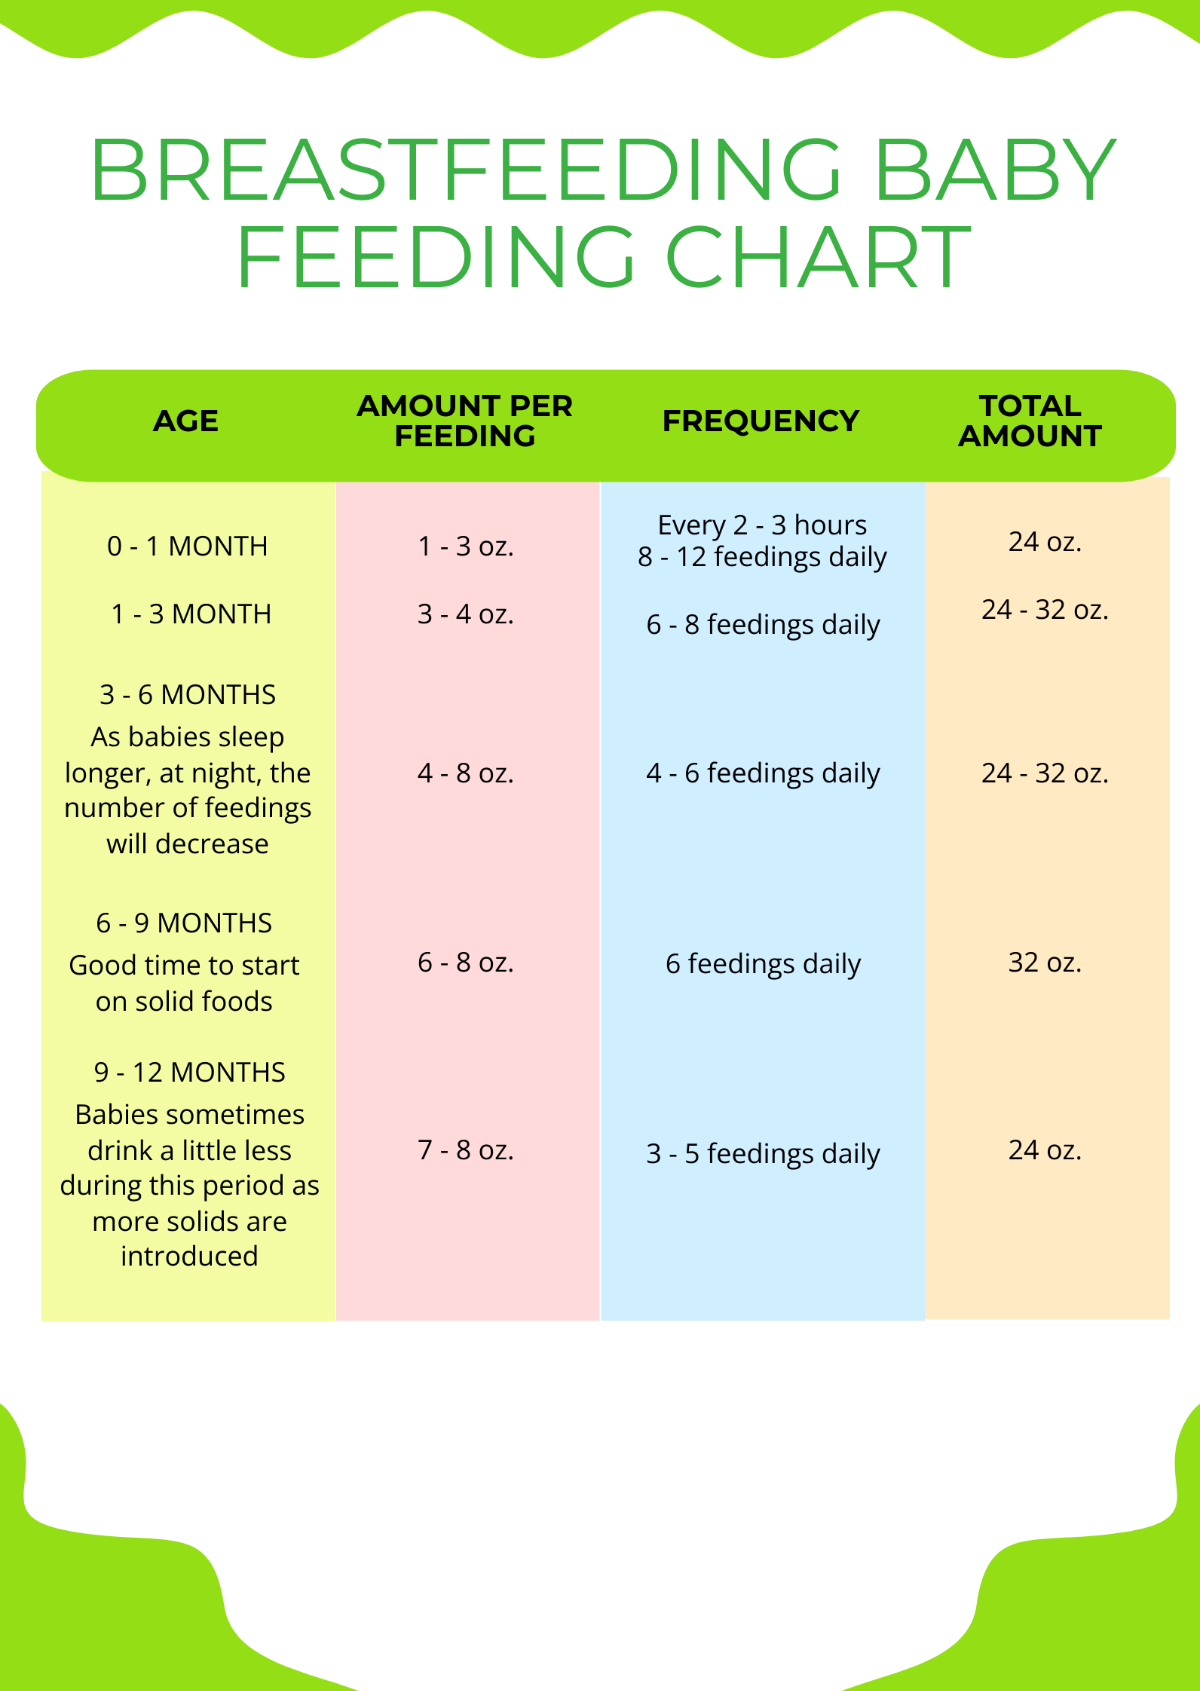 https://images.template.net/220367/breastfeeding-baby-feeding-chart-edit-online-1.jpg